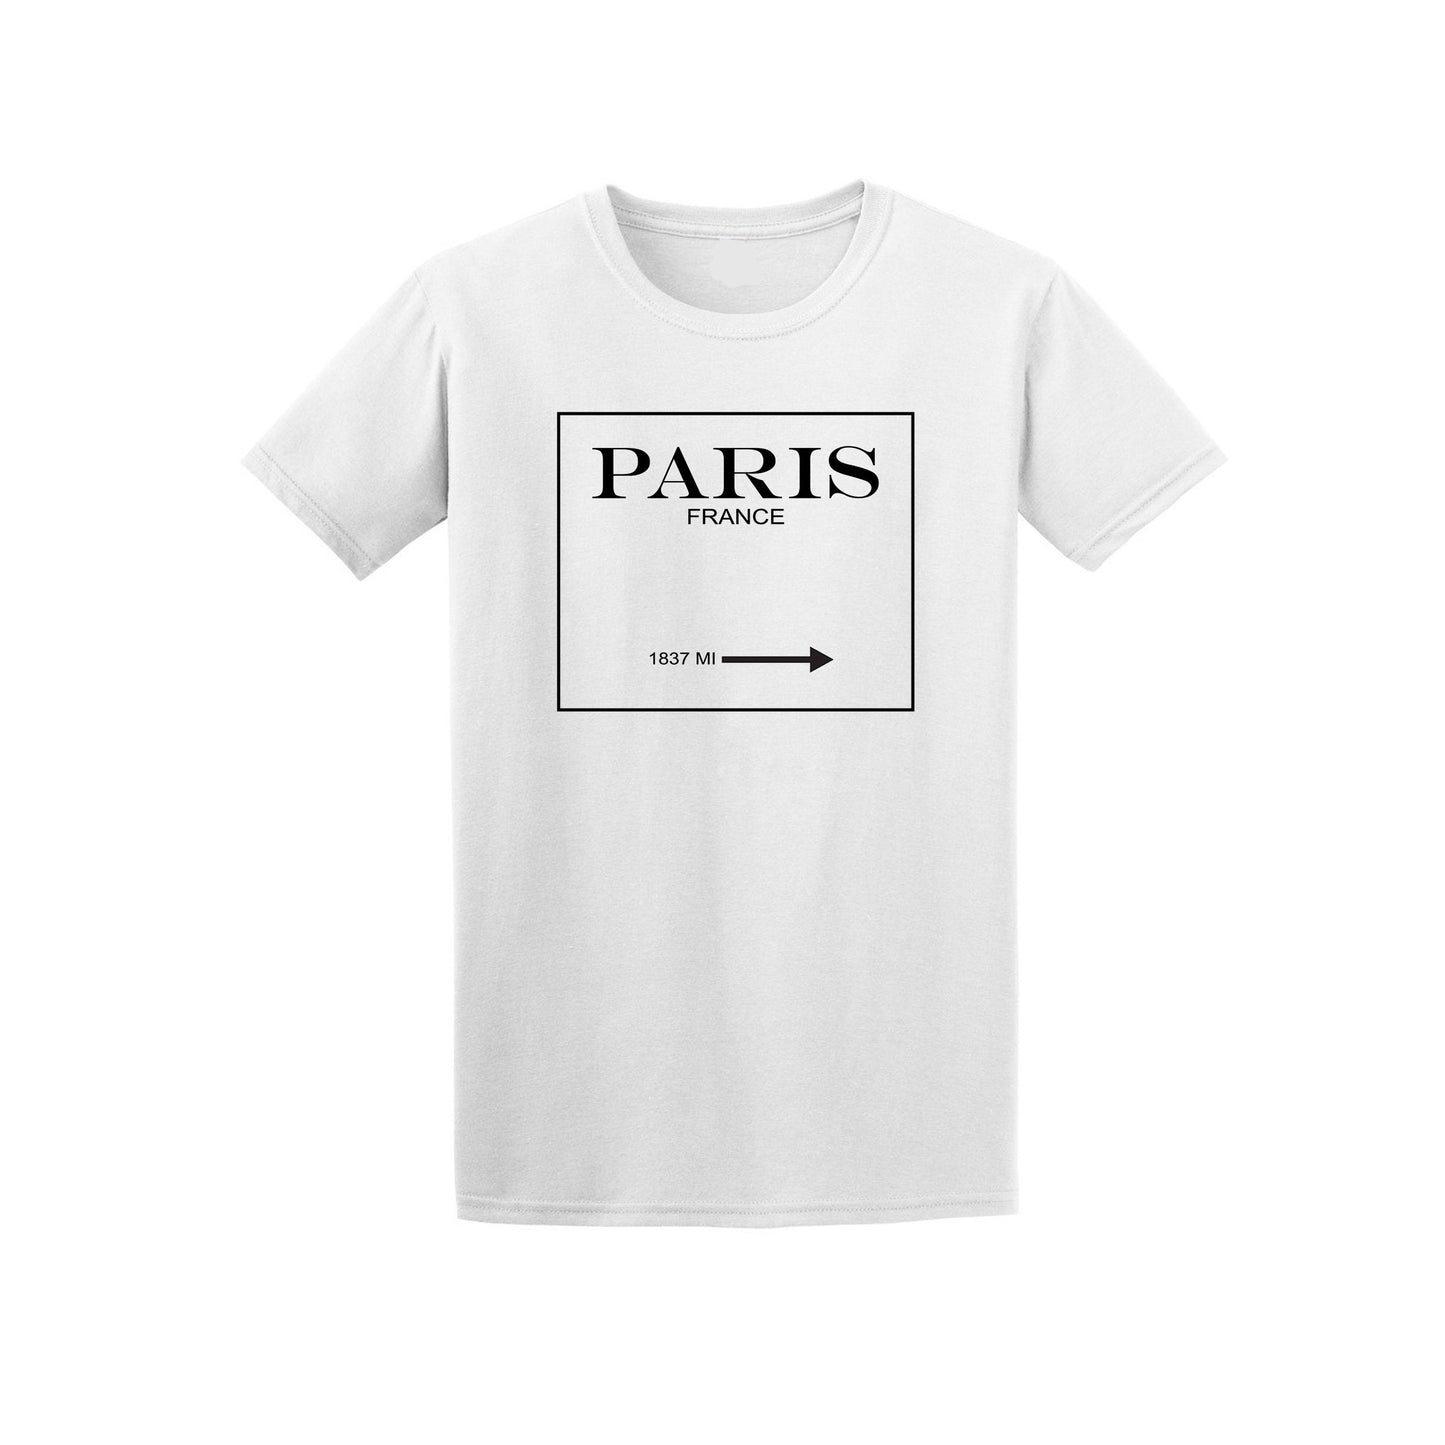 PARIS This Way T Shirt Cute Designer Fashion Milano Marfa Style Cotton Shirt